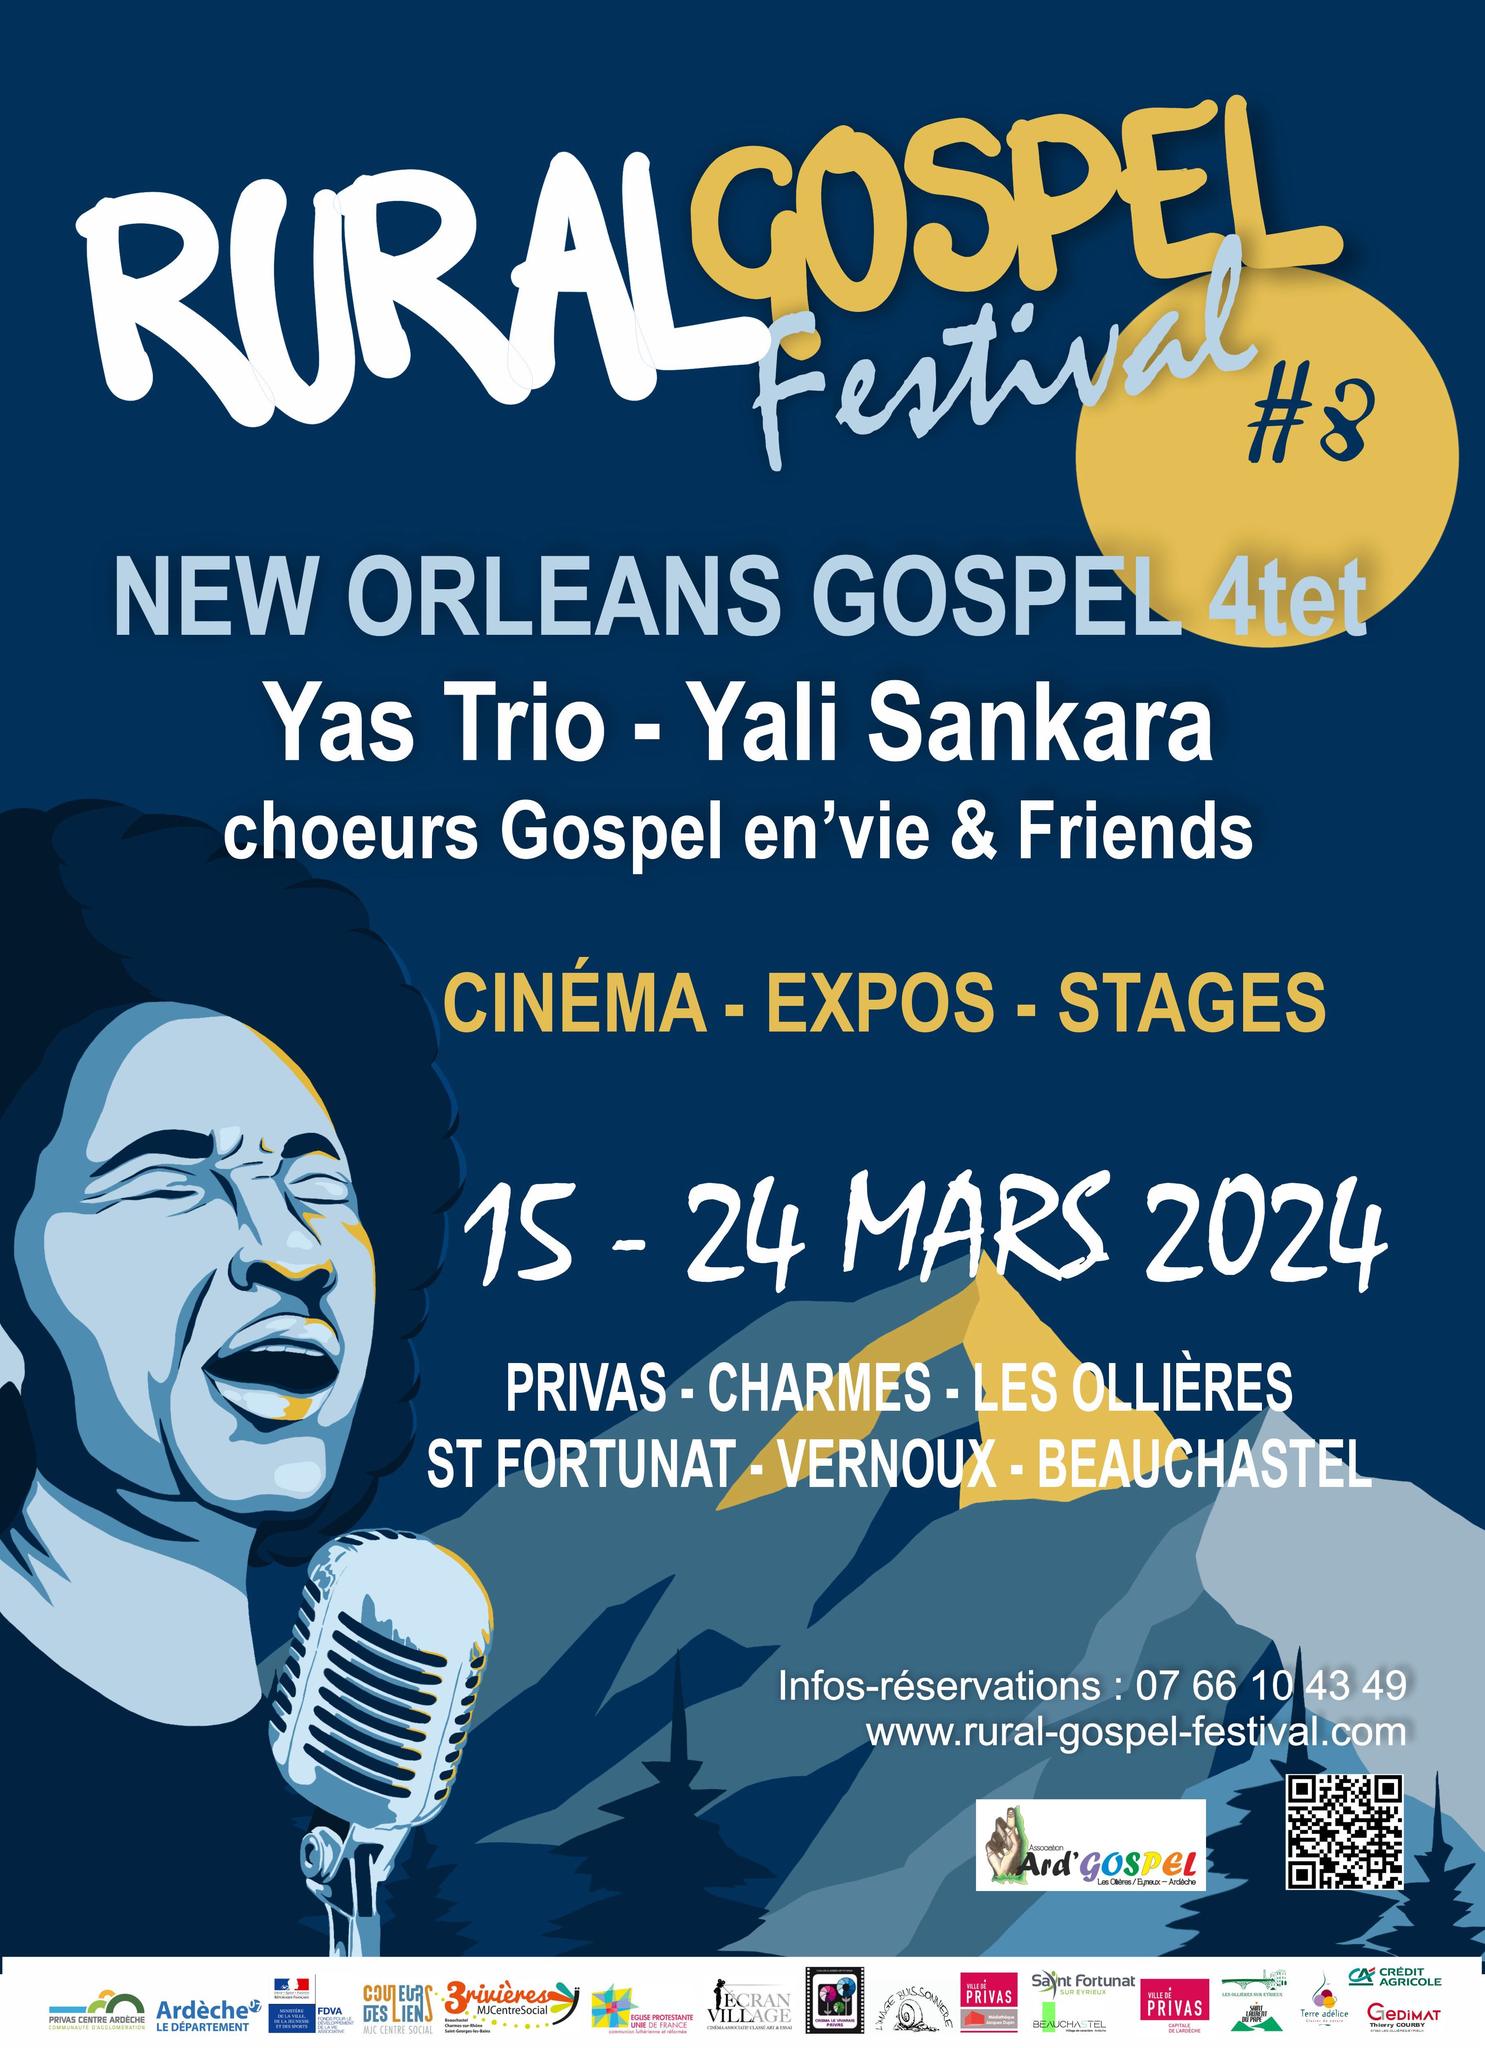 Alle leuke evenementen! : Concert de jazz avec Yas Trio [Rural Gospel Festival #8]